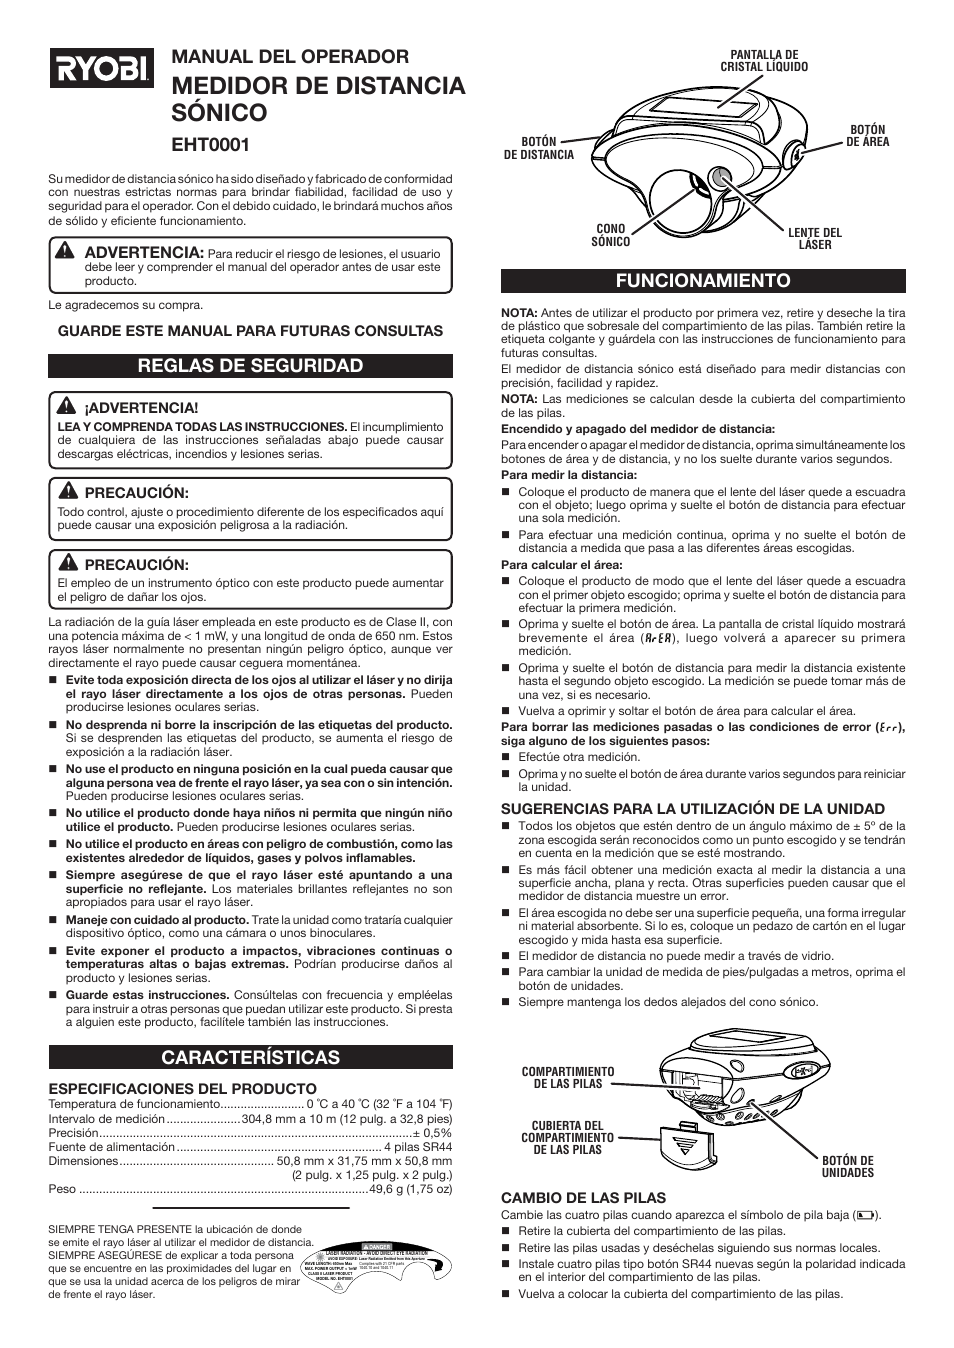 Medidor de distancia sónico, Manual del operador, Eht0001 | Ryobi EHT0001 User  Manual | Page 2 / 2 | Original mode